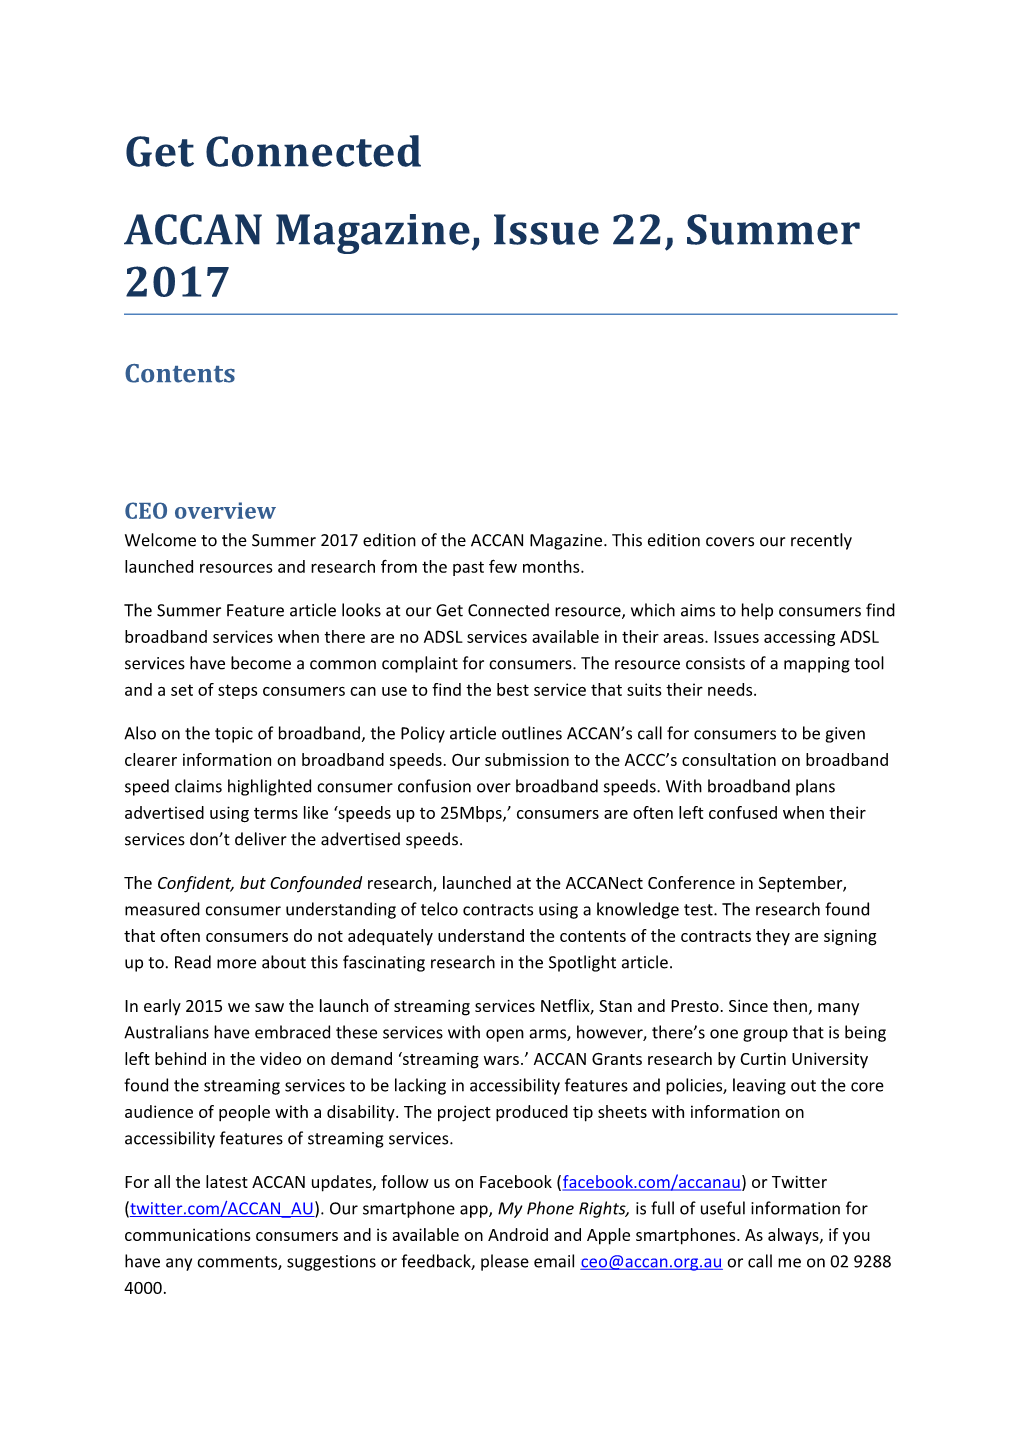 ACCAN Magazine, Issue 22, Summer 2017